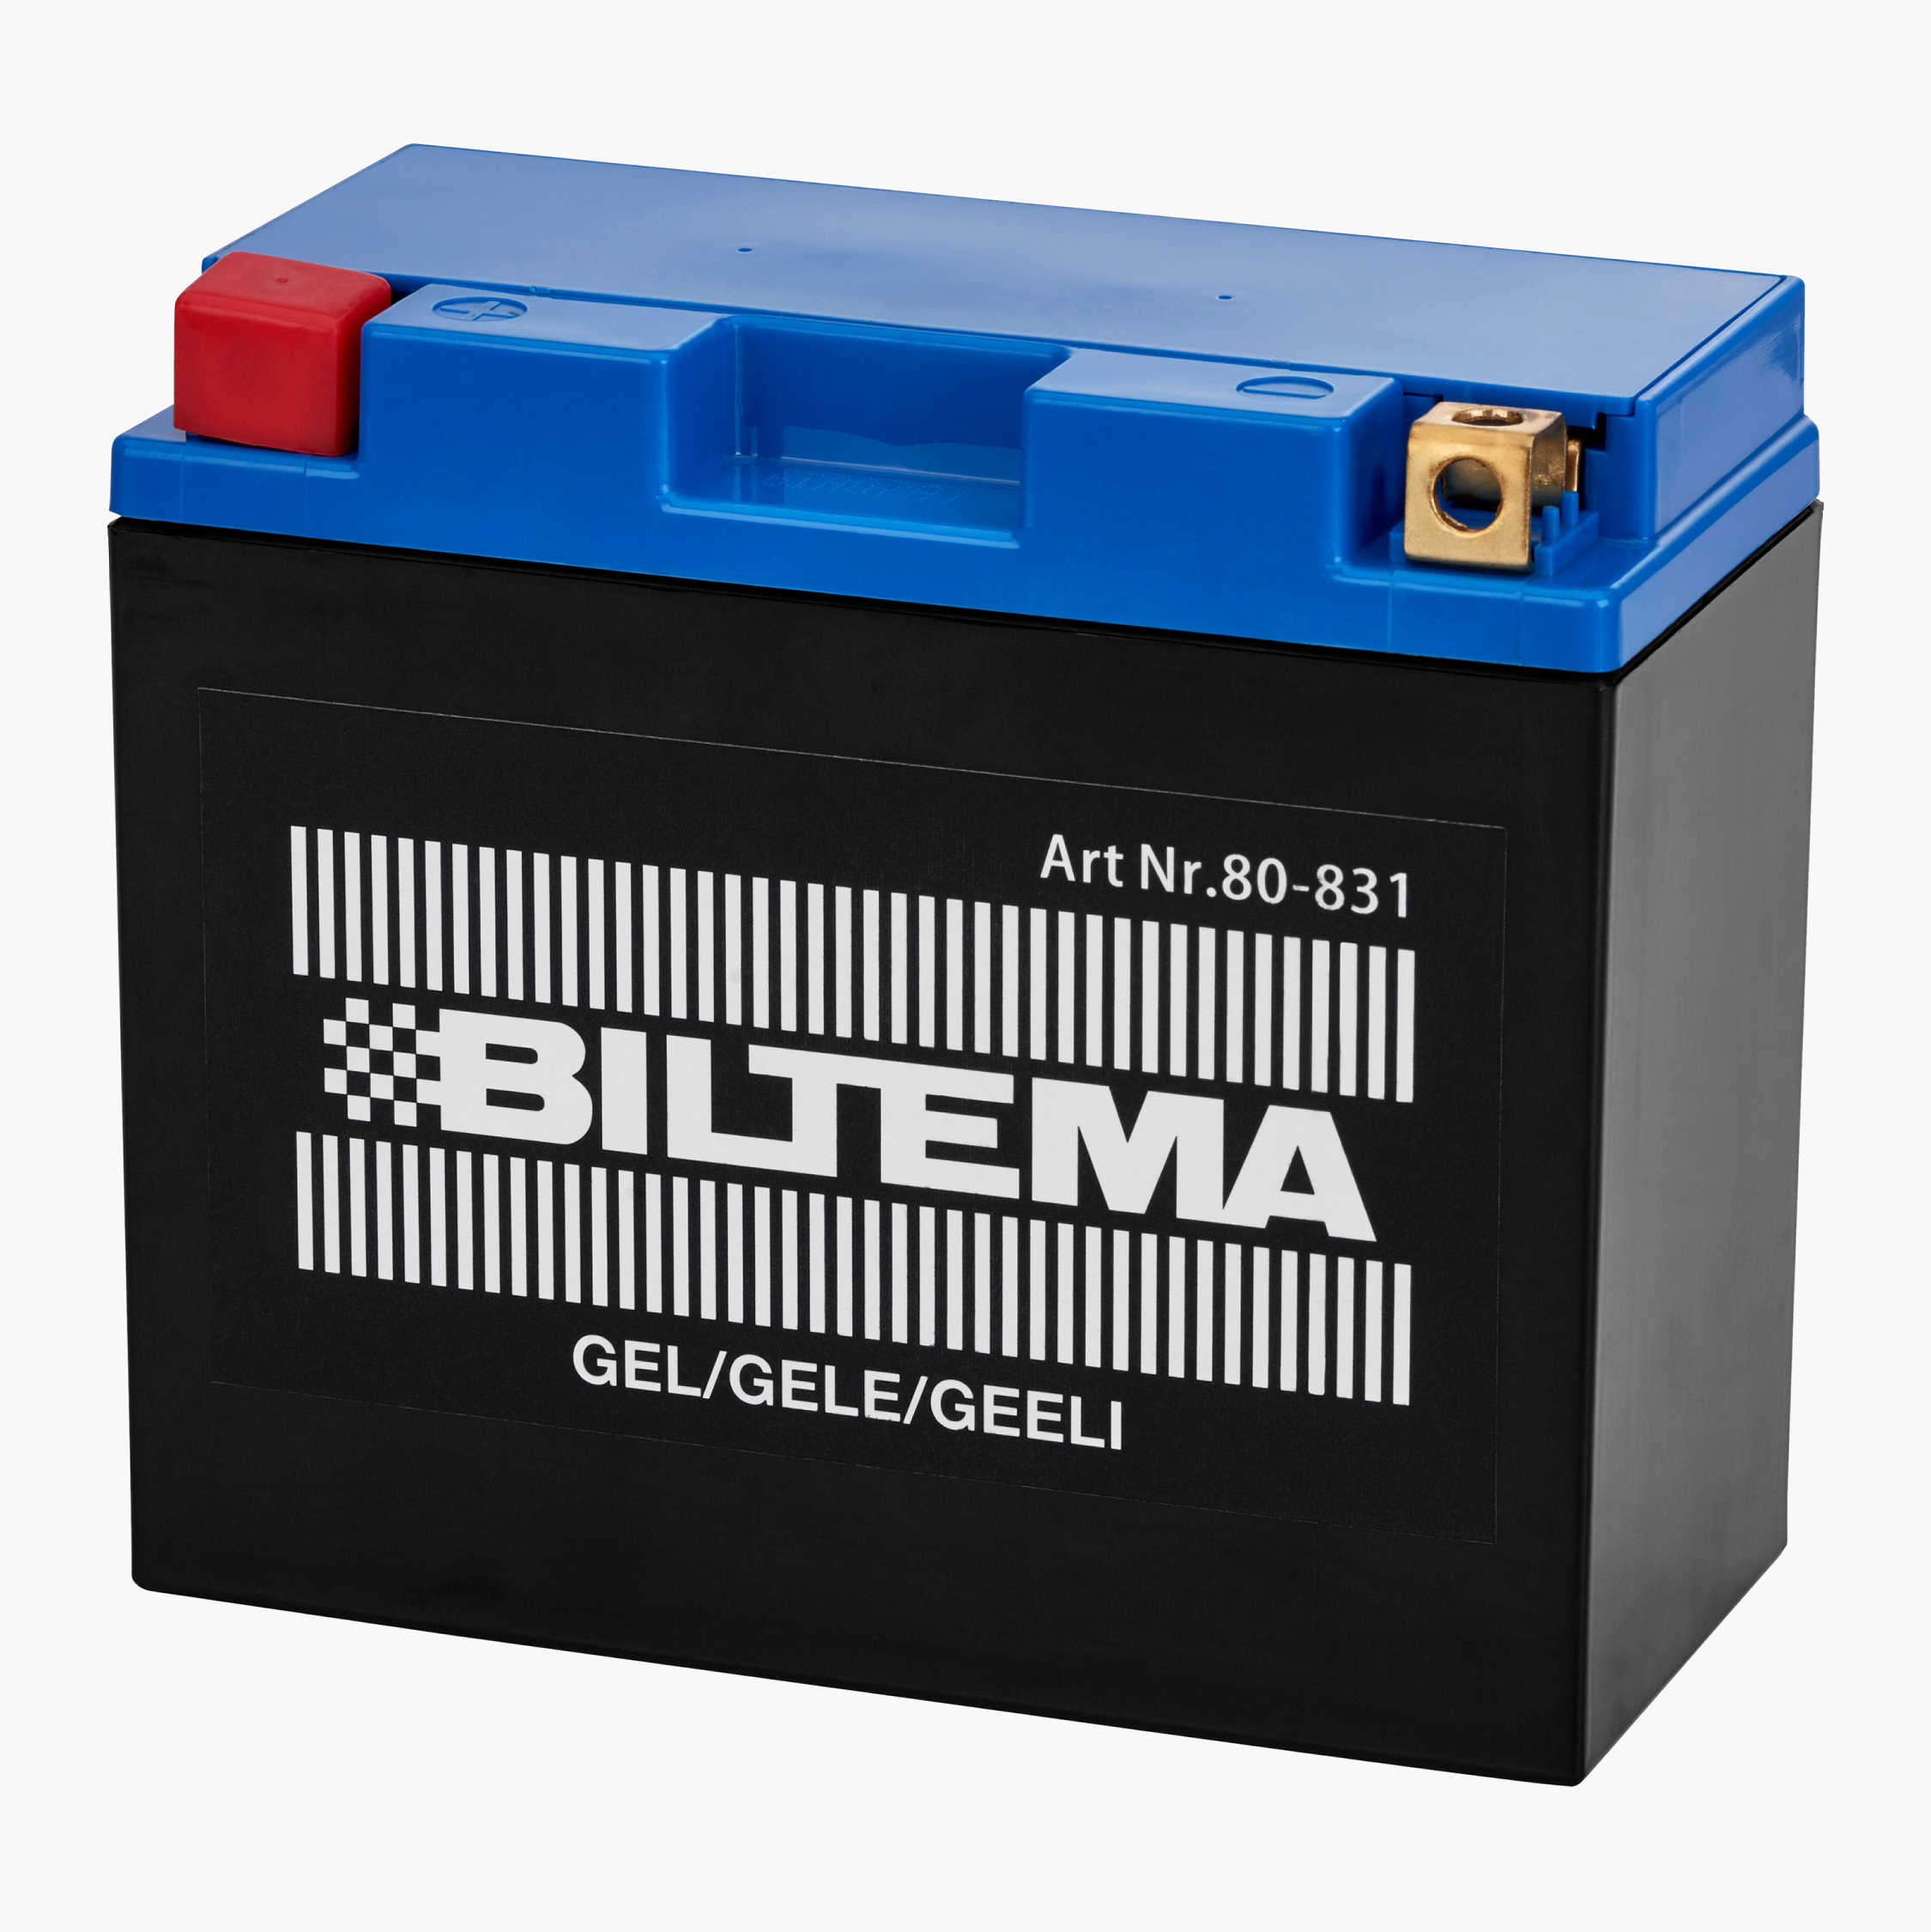 entanglement legation Leia MC-batteri Gel, 12 V, 10 Ah, 150 x 69 x 130 mm - Biltema.dk